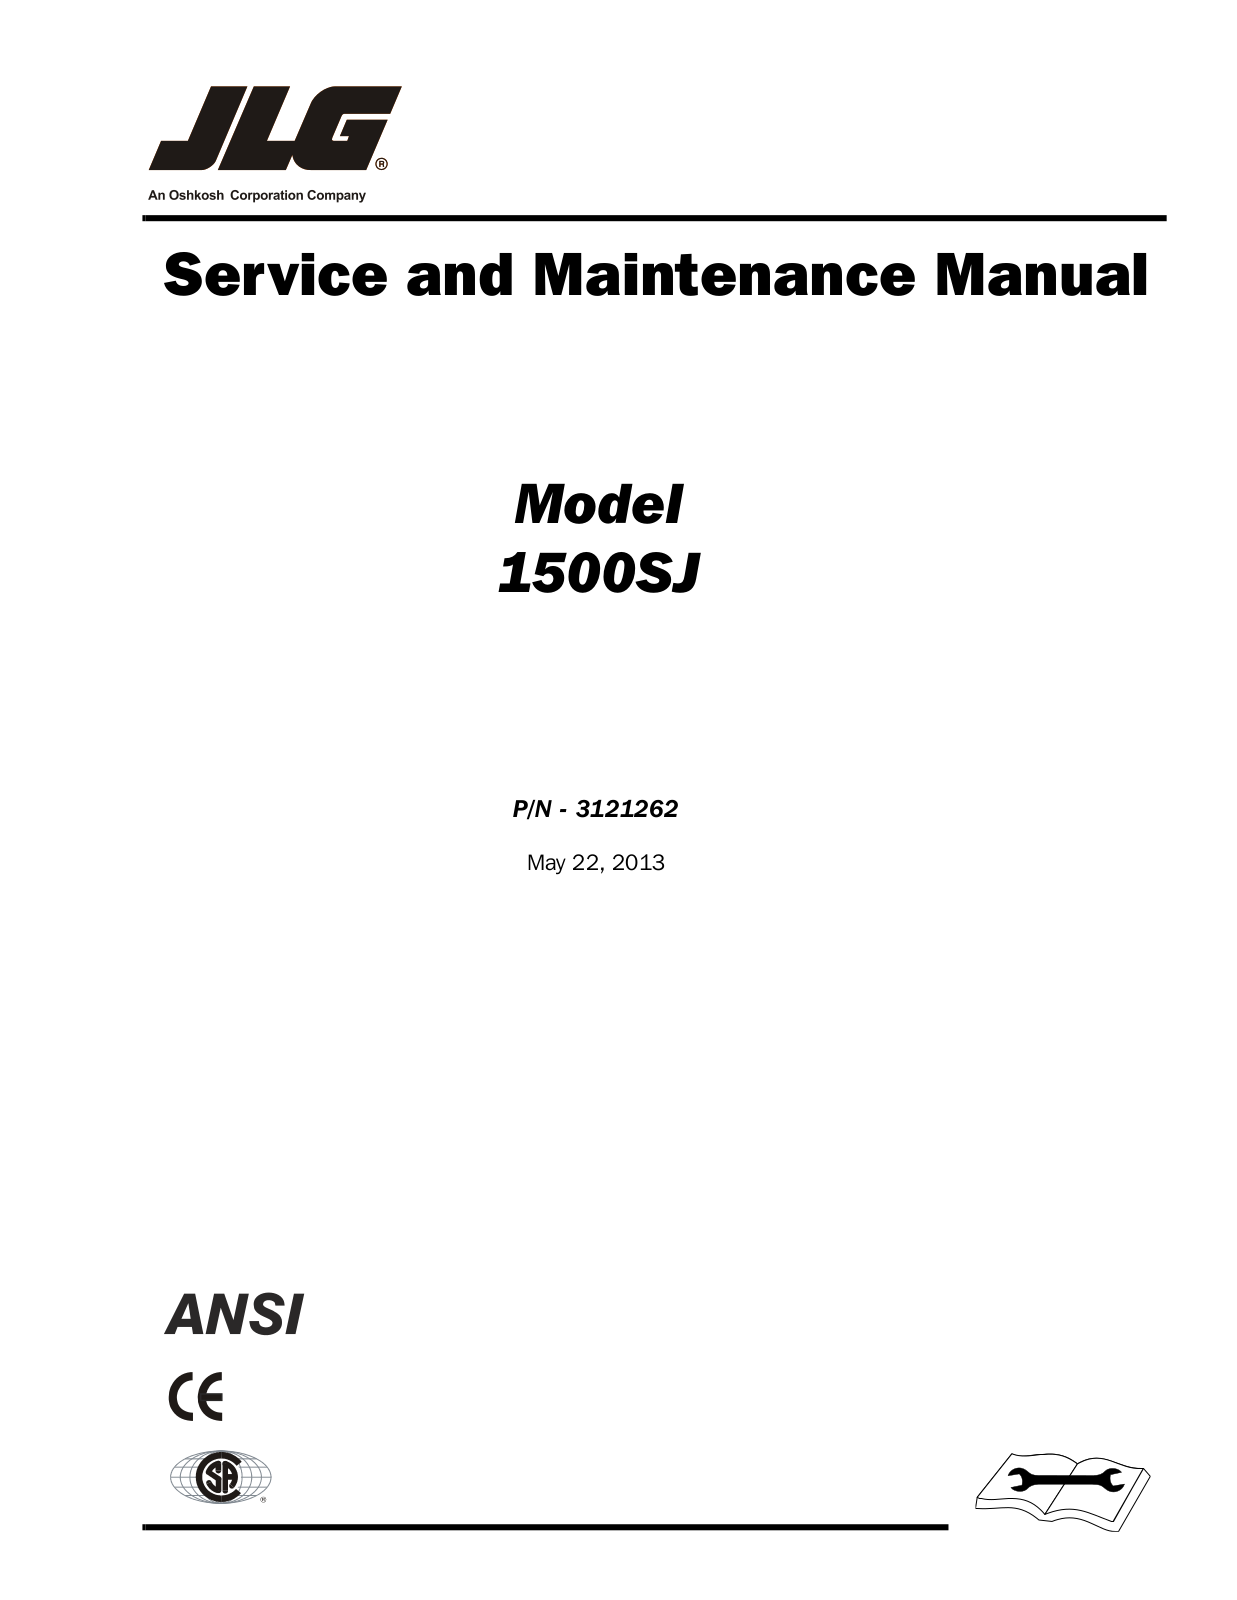 JLG 1500SJ Service Manual